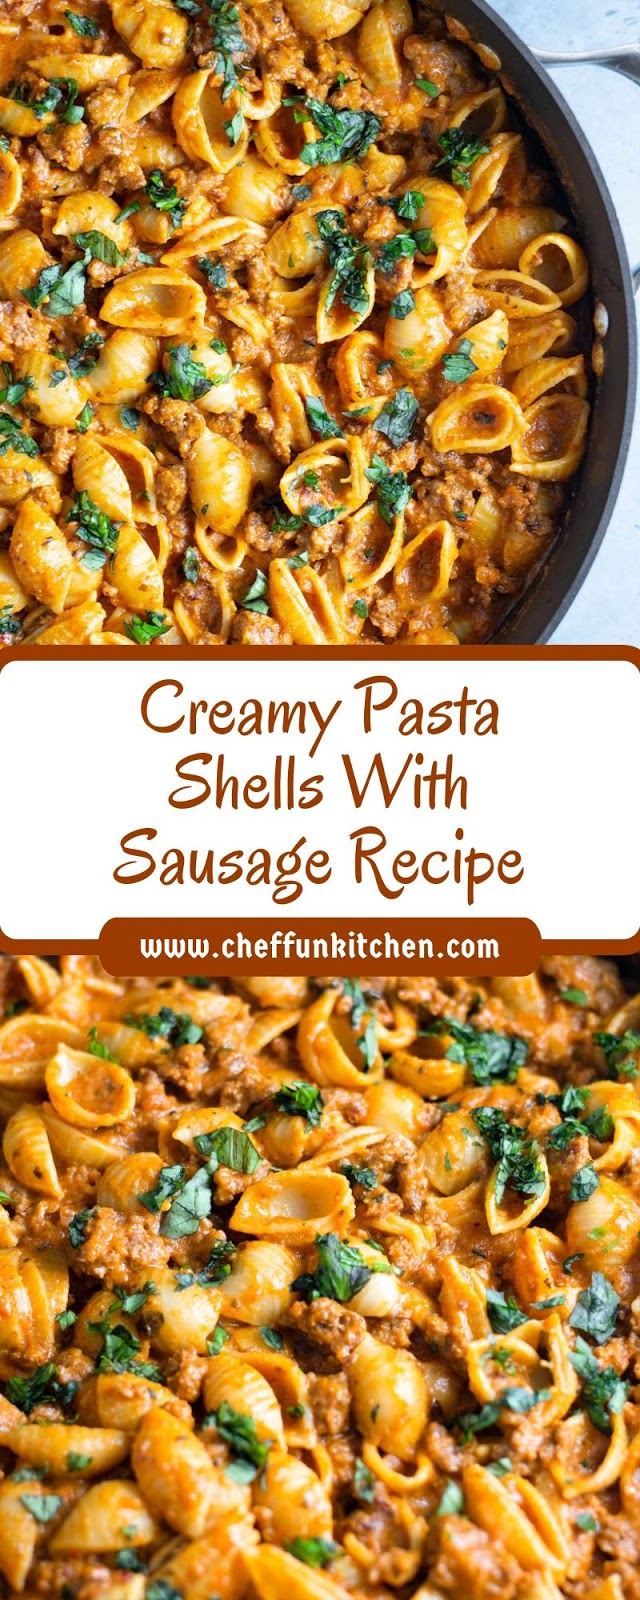 Creamy Pasta Shells With Sausage Recipe